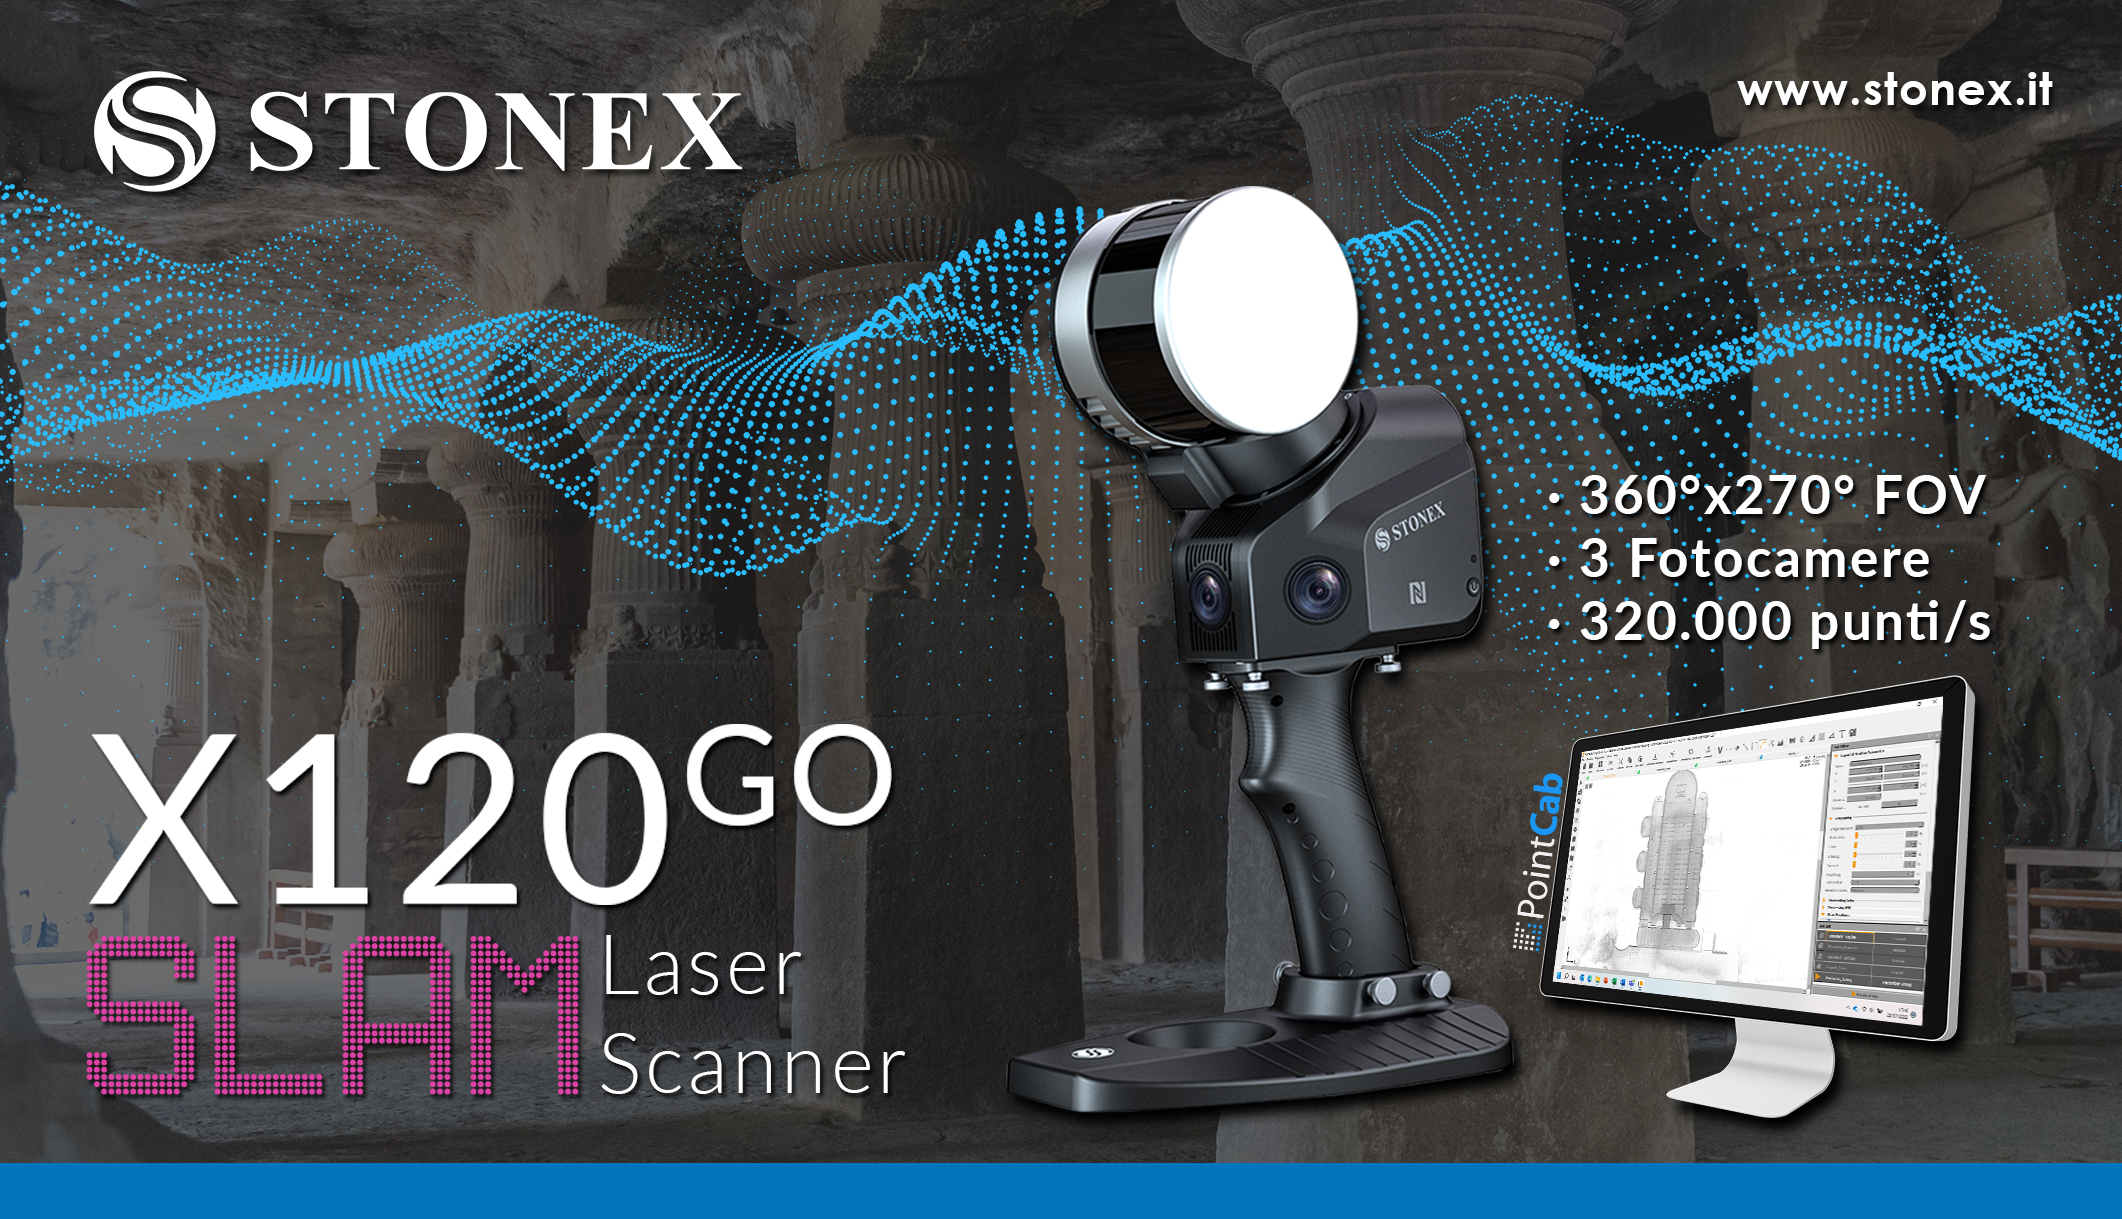 Stonex X120GO - Laser Scanner Preciso & Versatile